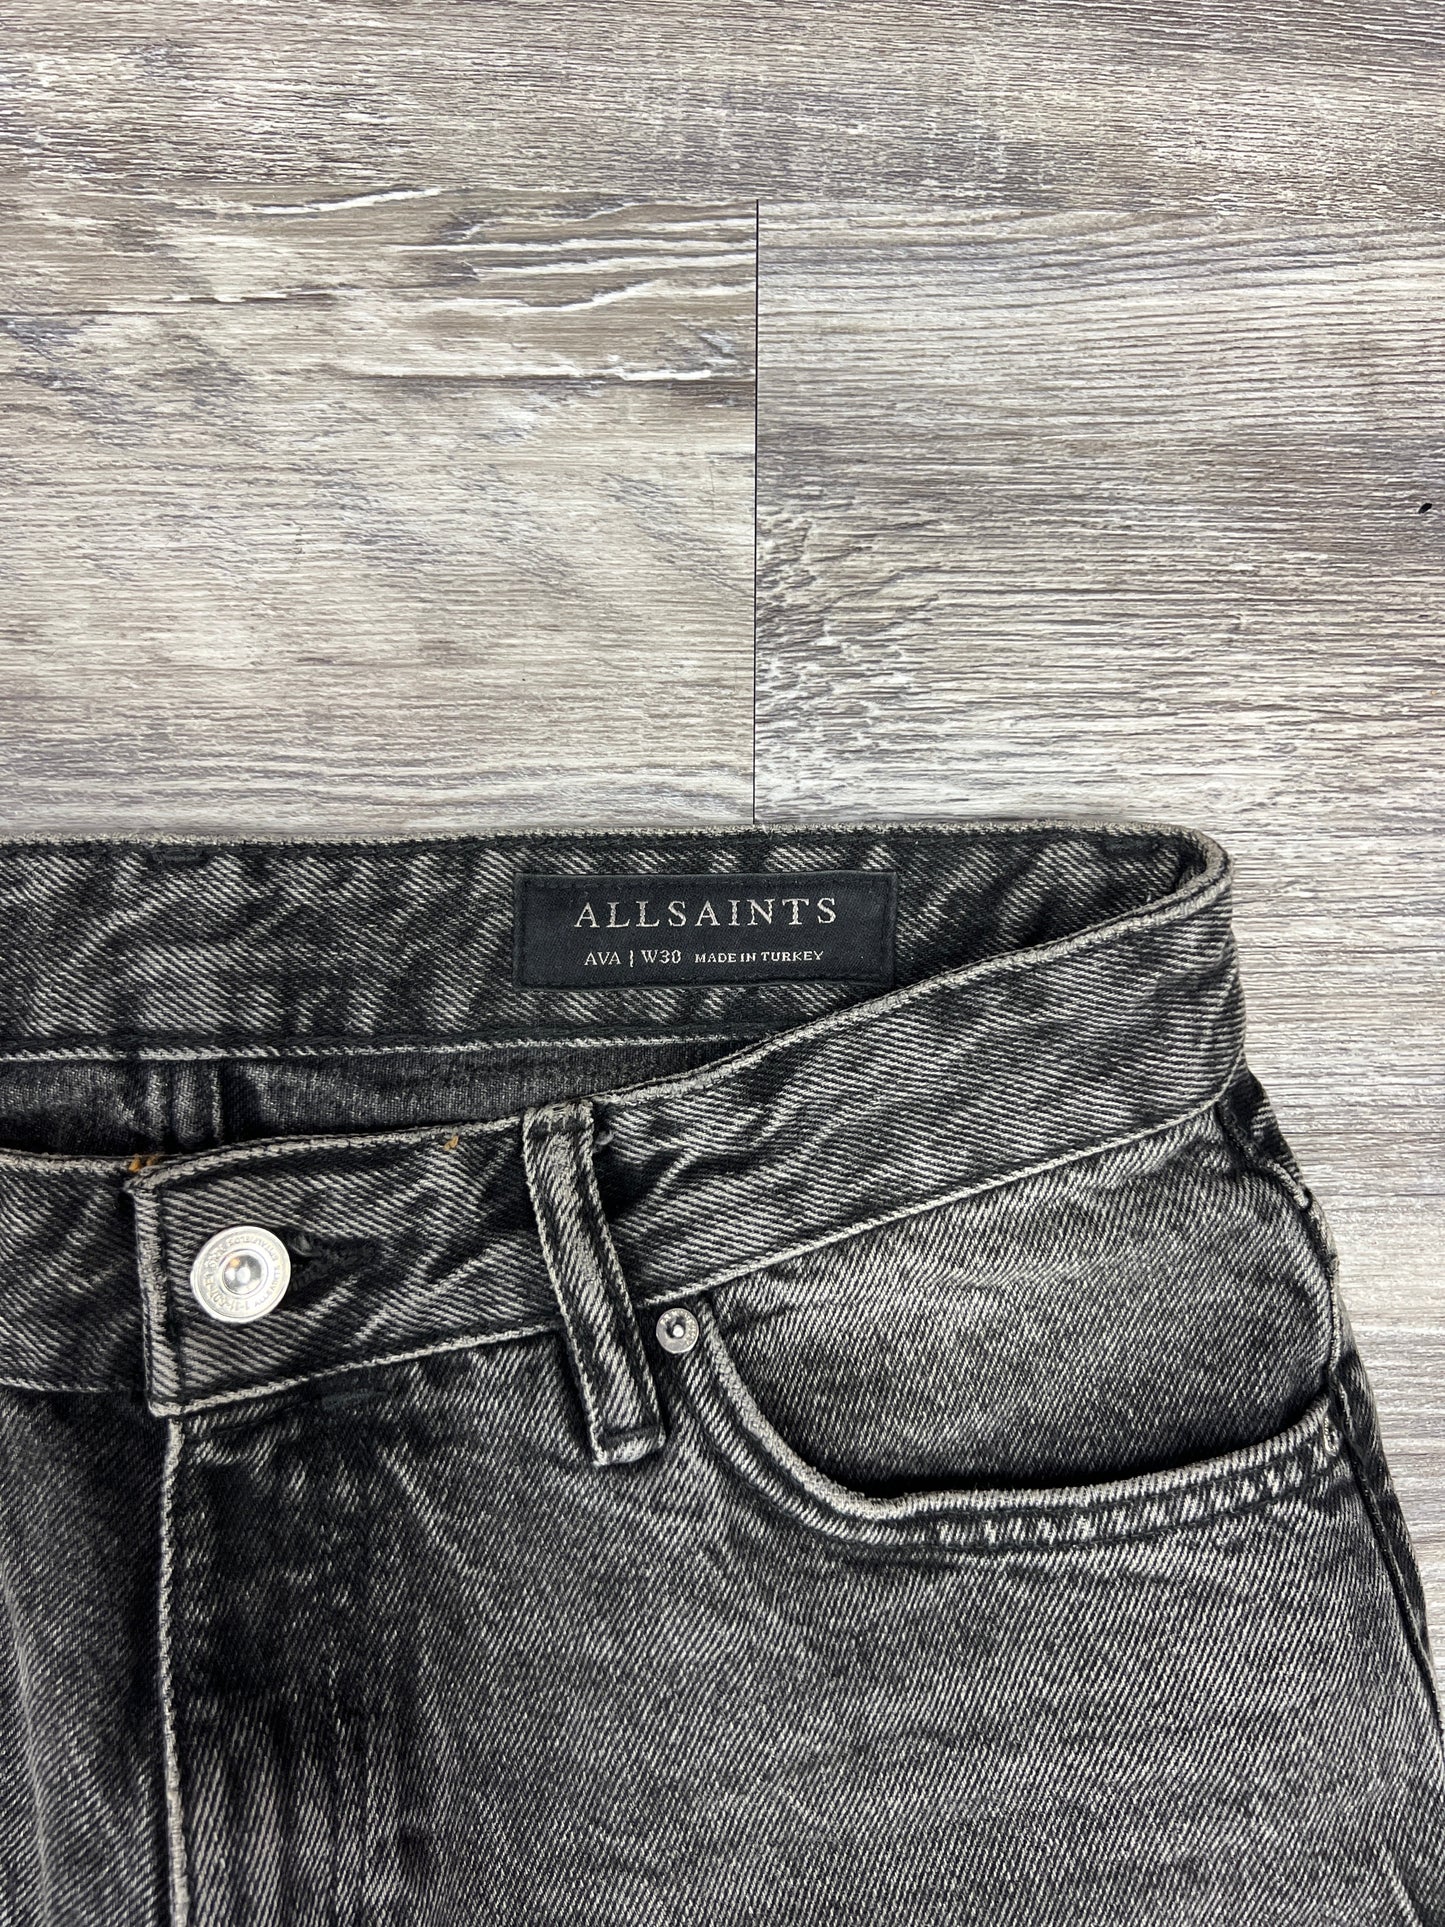 Jeans Designer By All Saints Size: 10